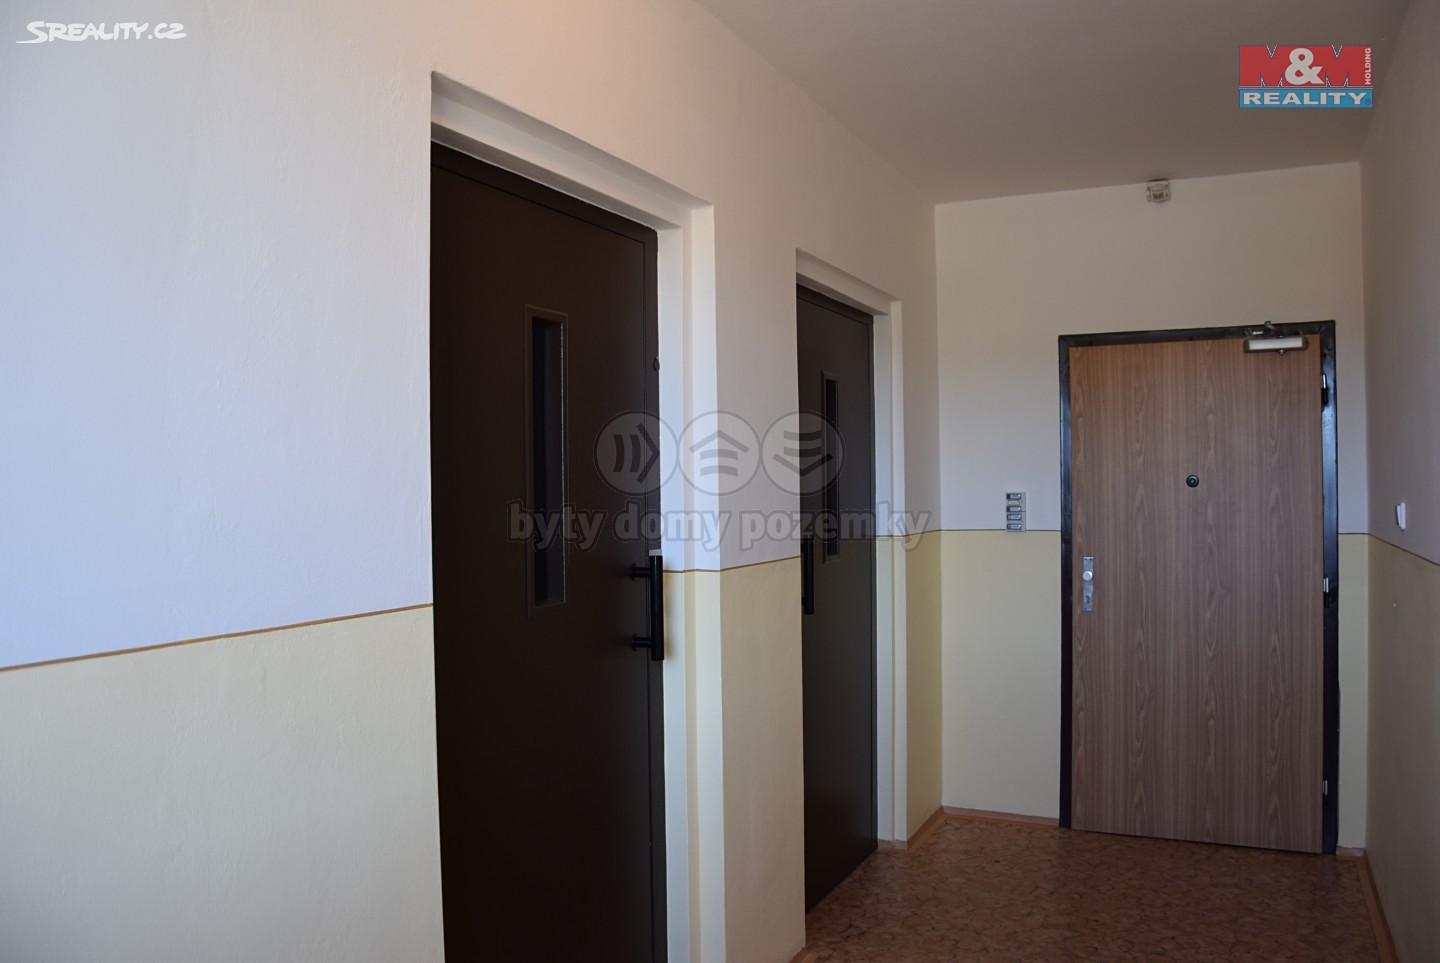 Prodej bytu 1+1 38 m², Pazderkova, Liberec - Liberec VI-Rochlice